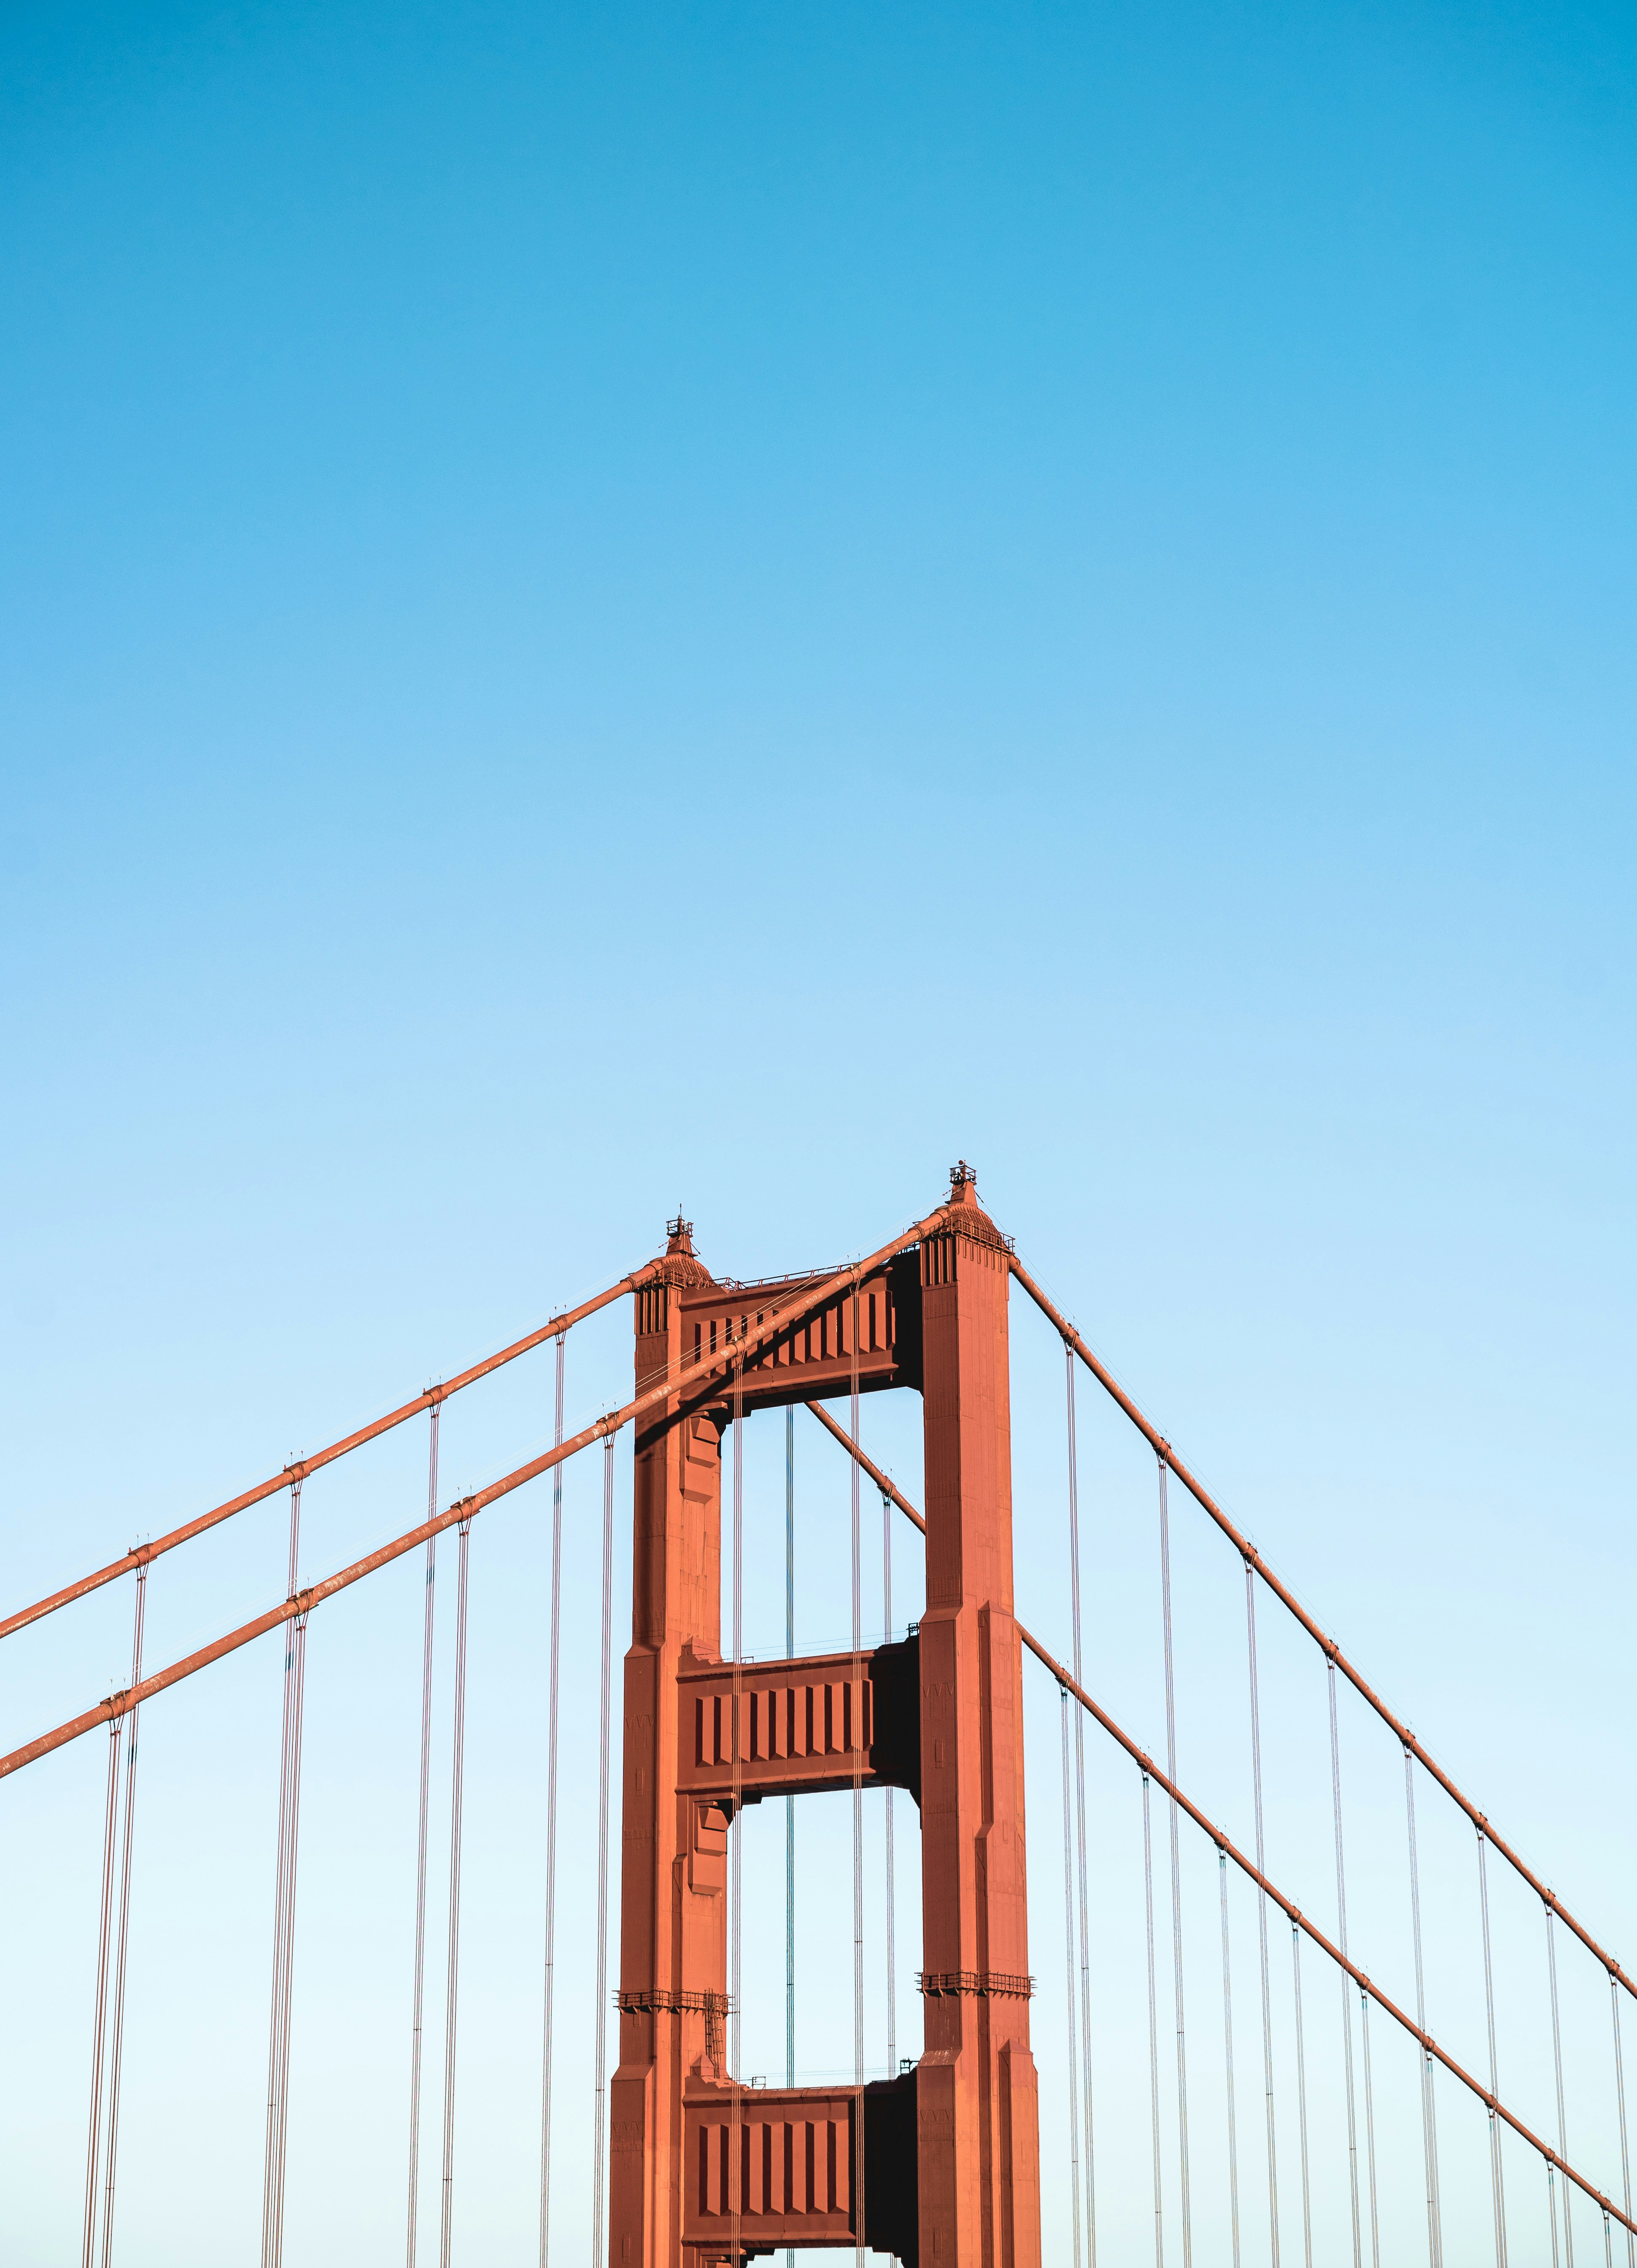 Golden Gate Bridge of San Francisco under calm blue sky